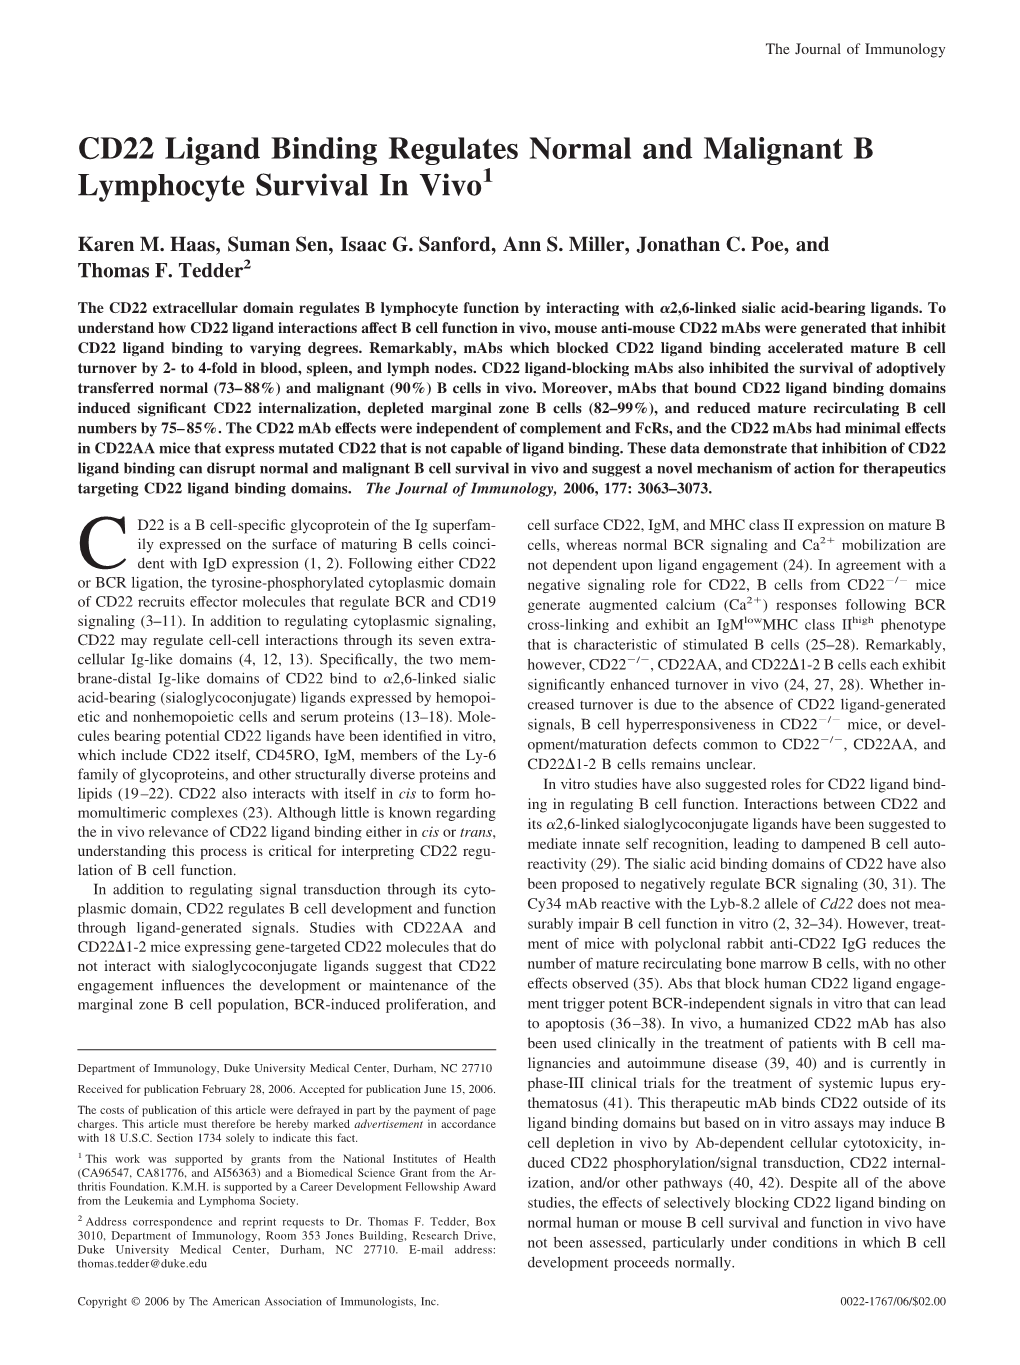 Malignant B Lymphocyte Survival in Vivo CD22 Ligand Binding Regulates Normal